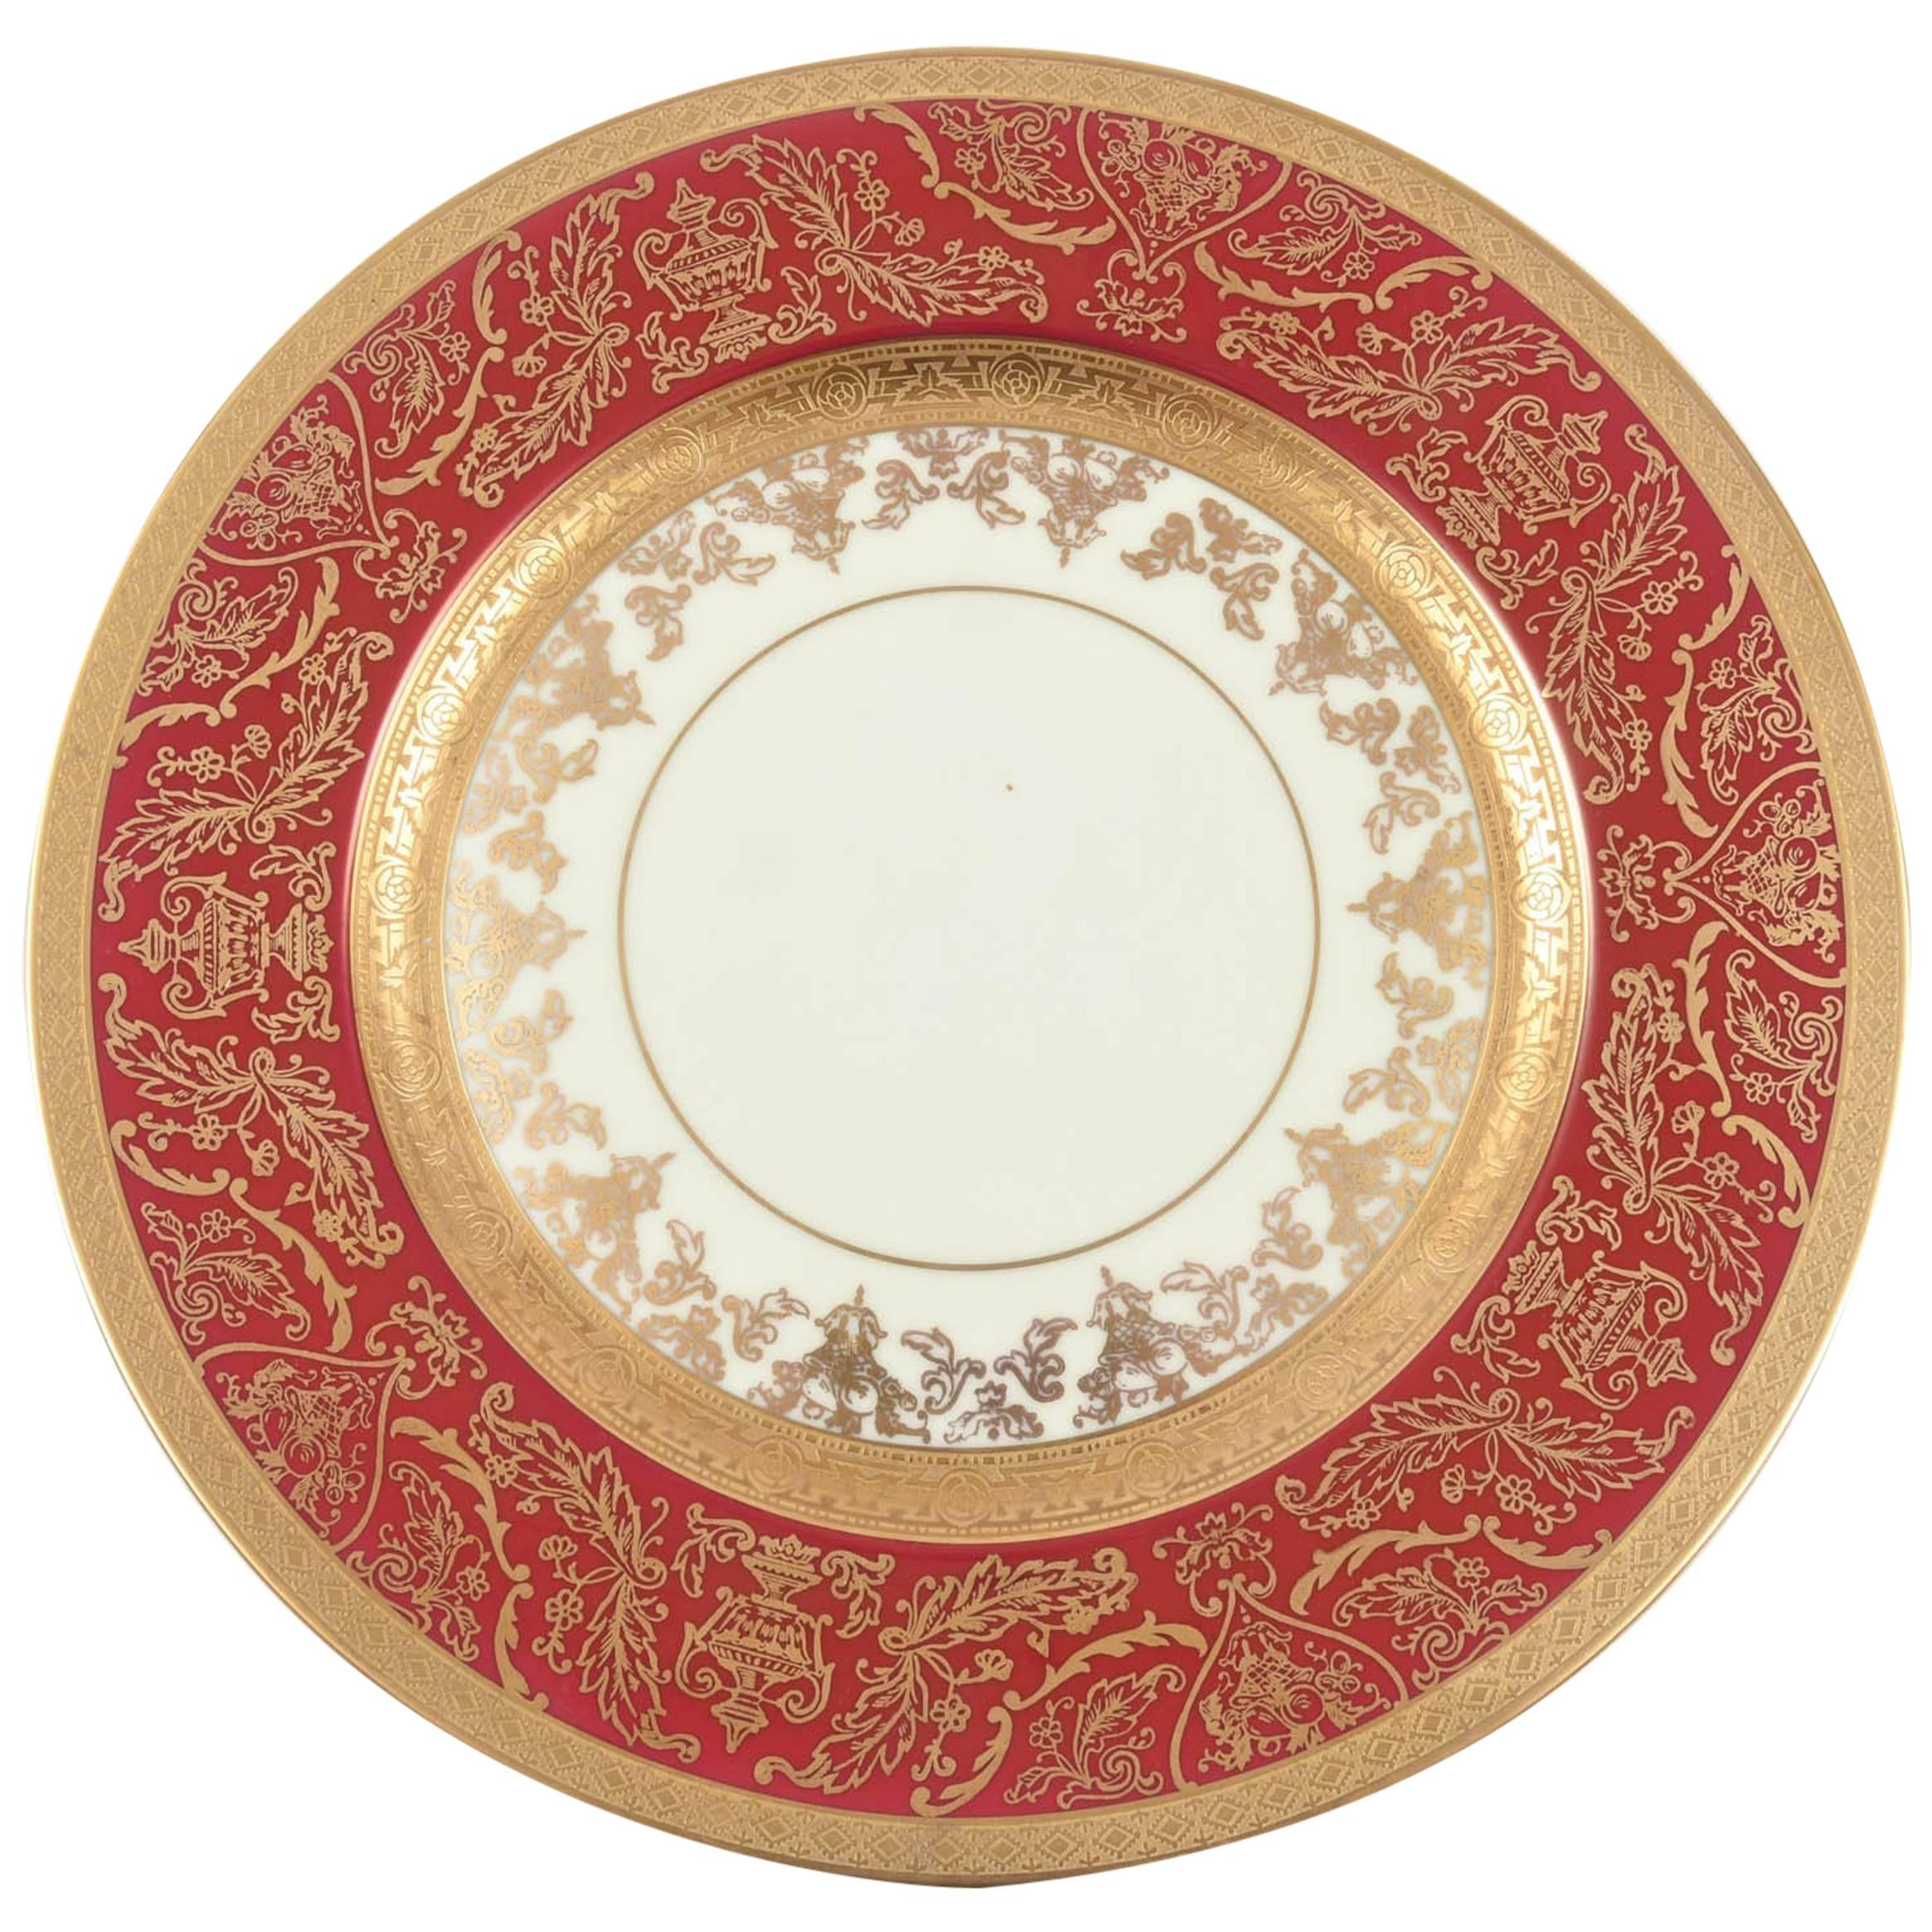 12 Impressive Ruby Red & Gold Encrusted Dinner or Presentation Plates, Antique